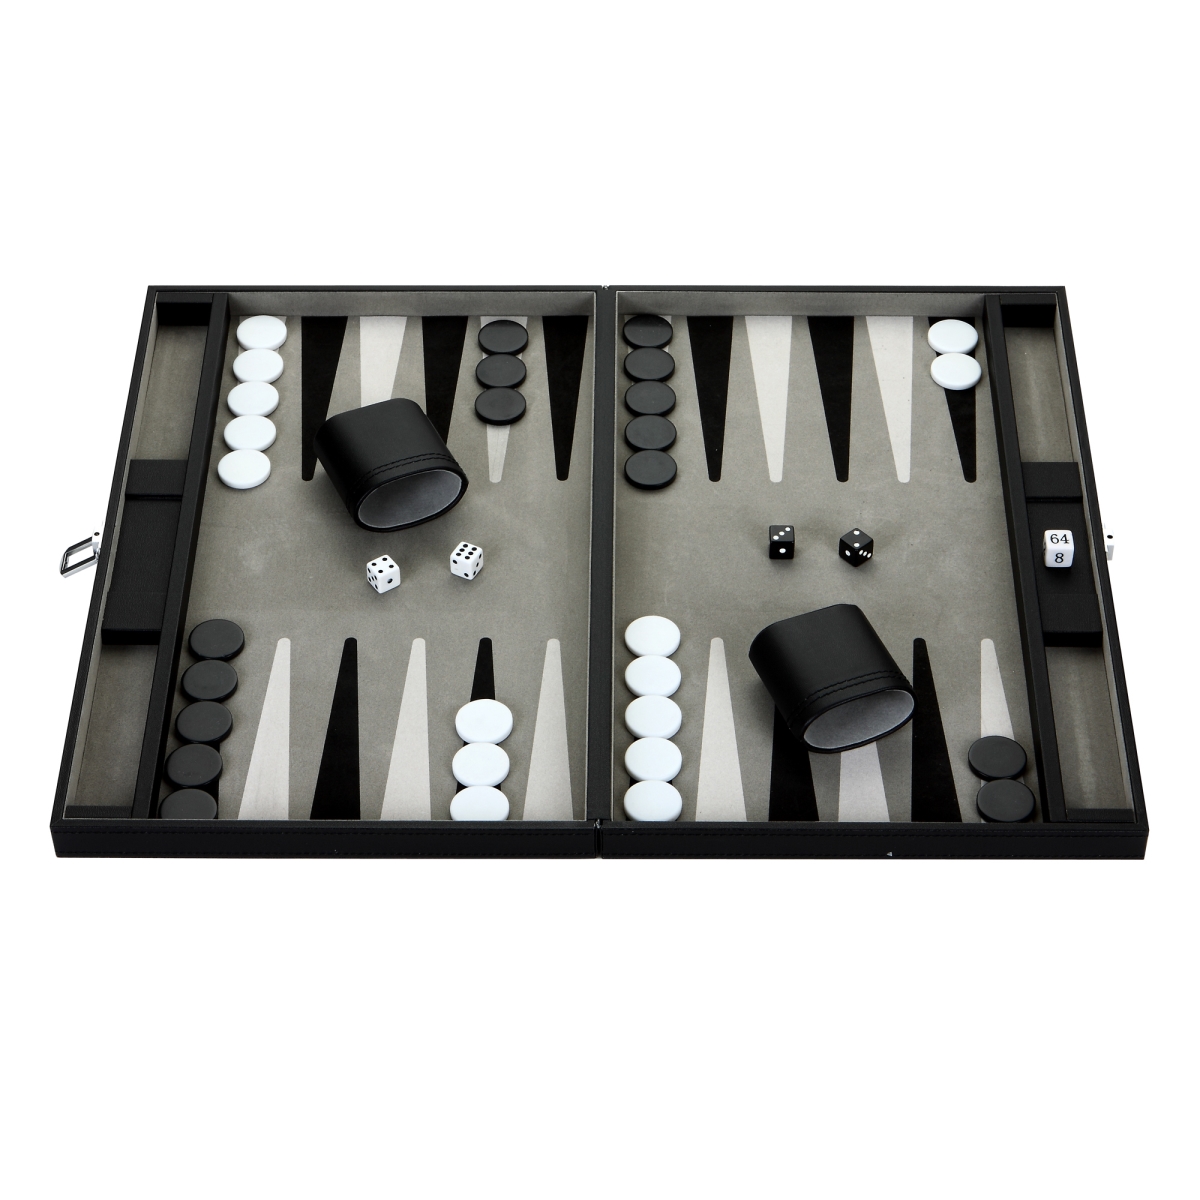 Ng2120 Premium Backgammon Set